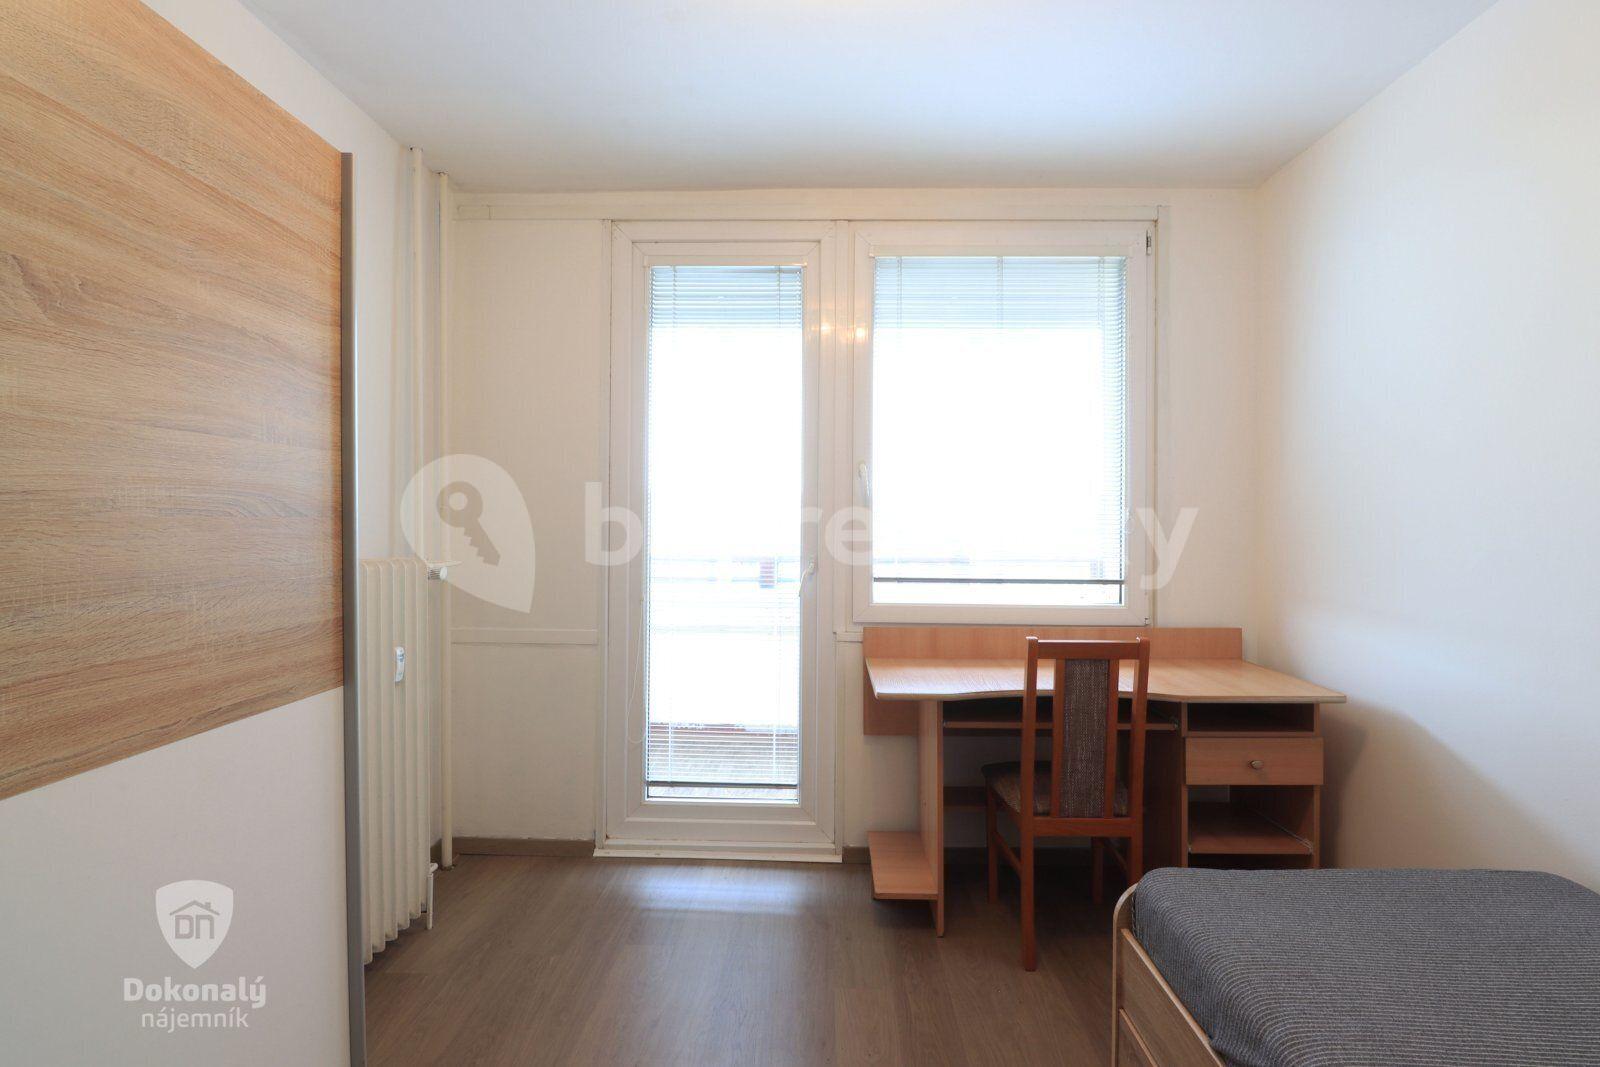 3 bedroom flat to rent, 73 m², Vysočanská, Prague, Prague